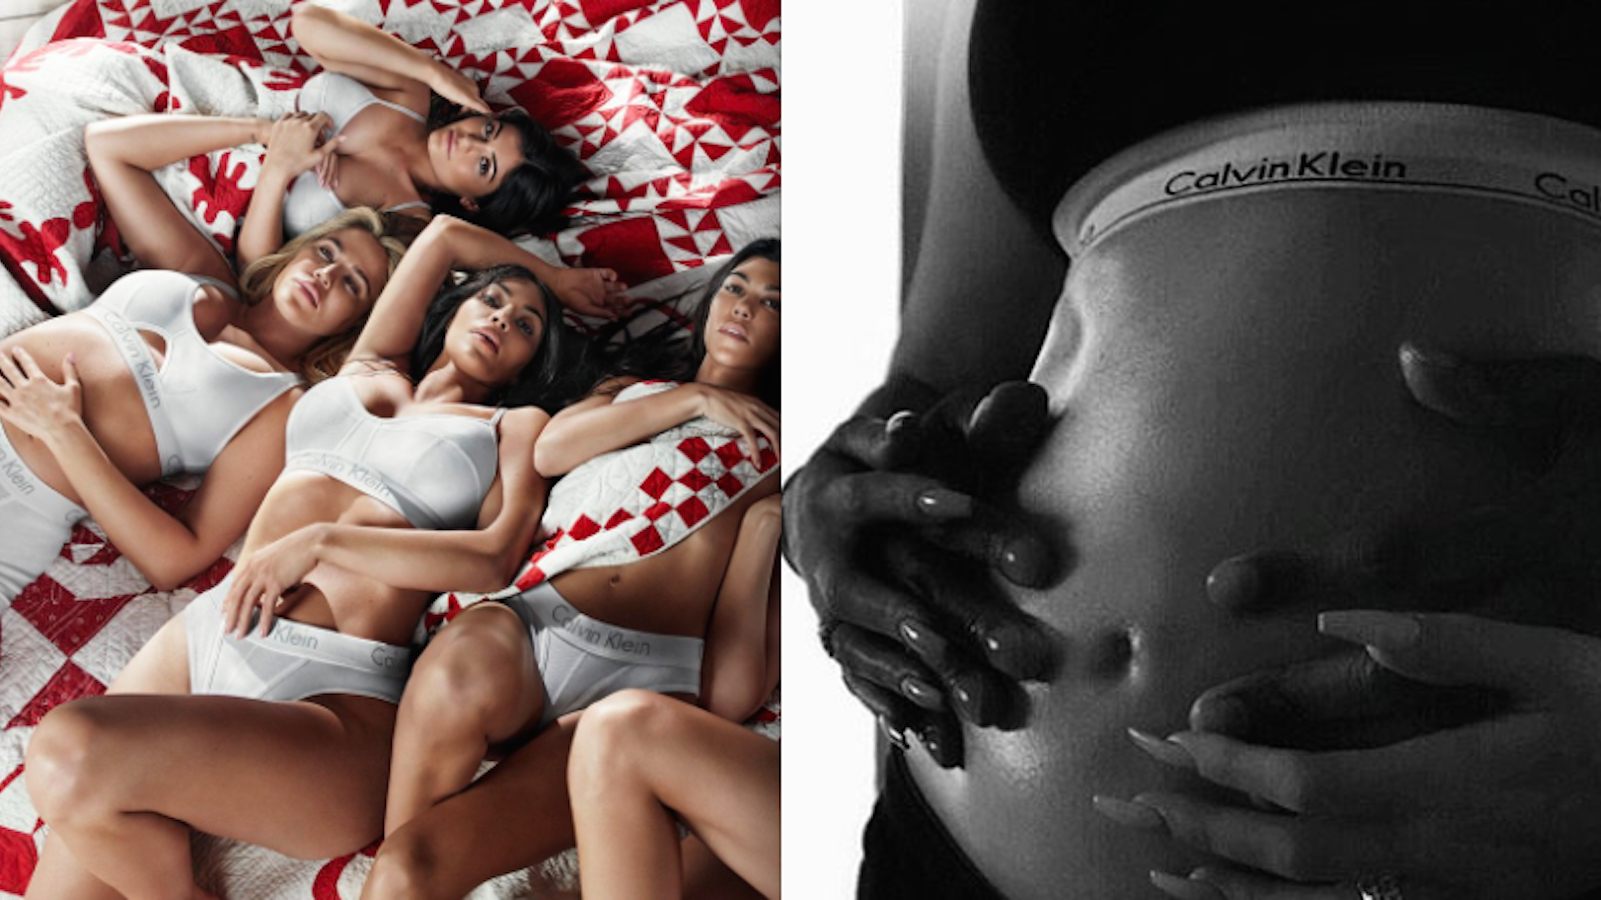 Kylie Jenner and Khloe Kardashian Pregnancies Sponsored by Calvin Klein?